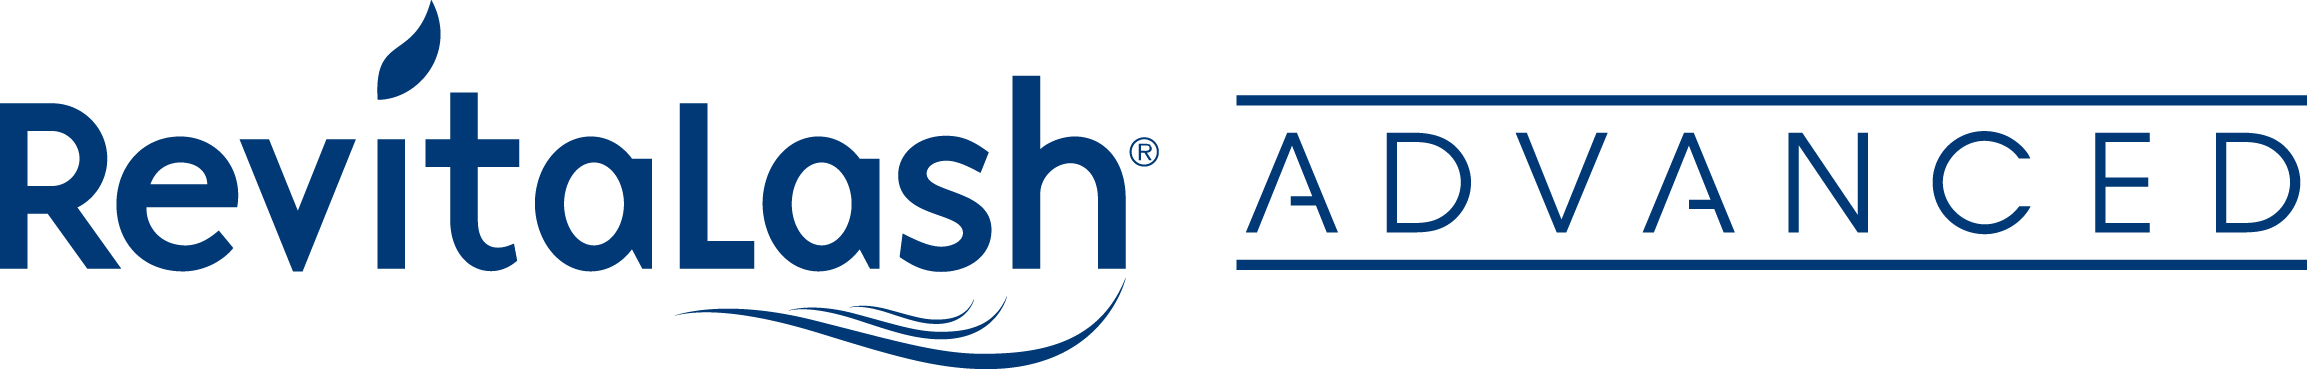 Revitalash Logo - Products